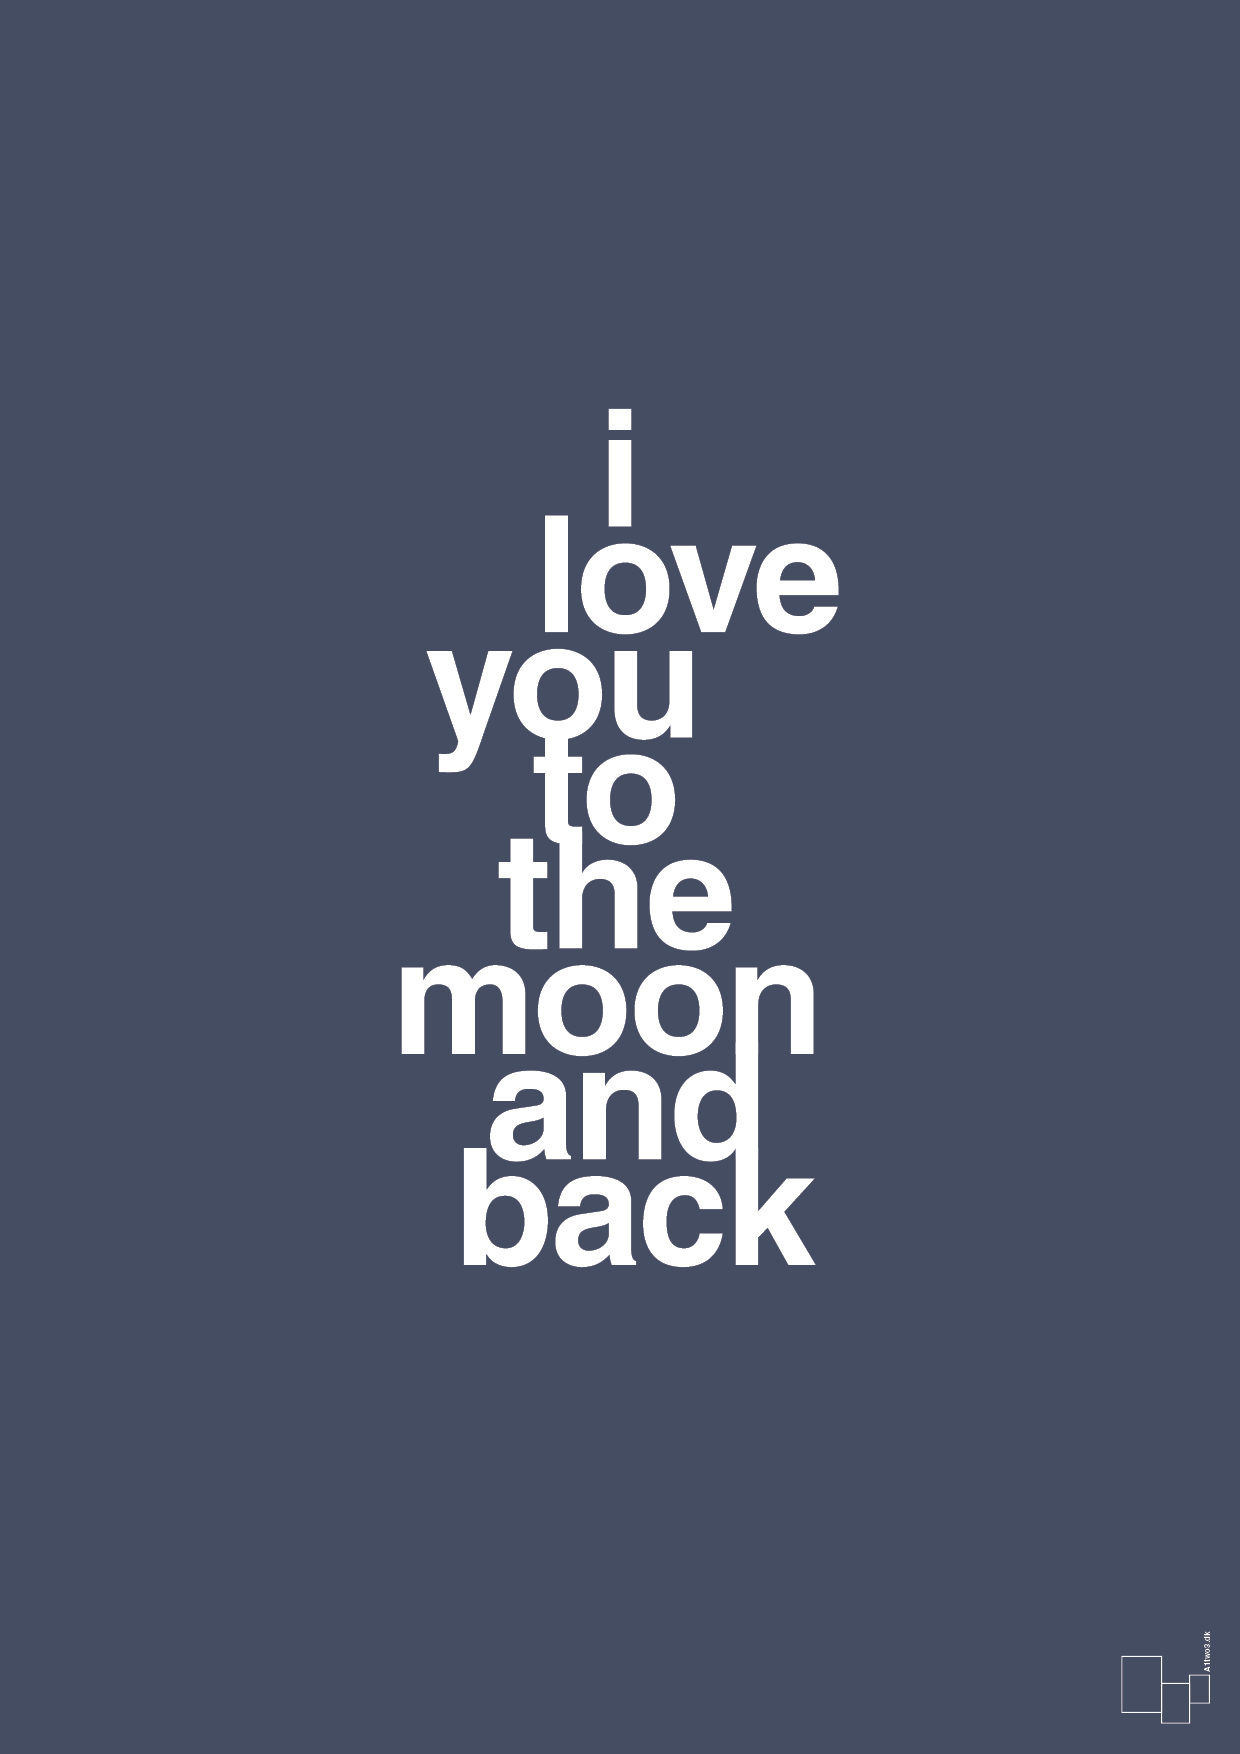 i love you to the moon and back - Plakat med Ordsprog i Petrol